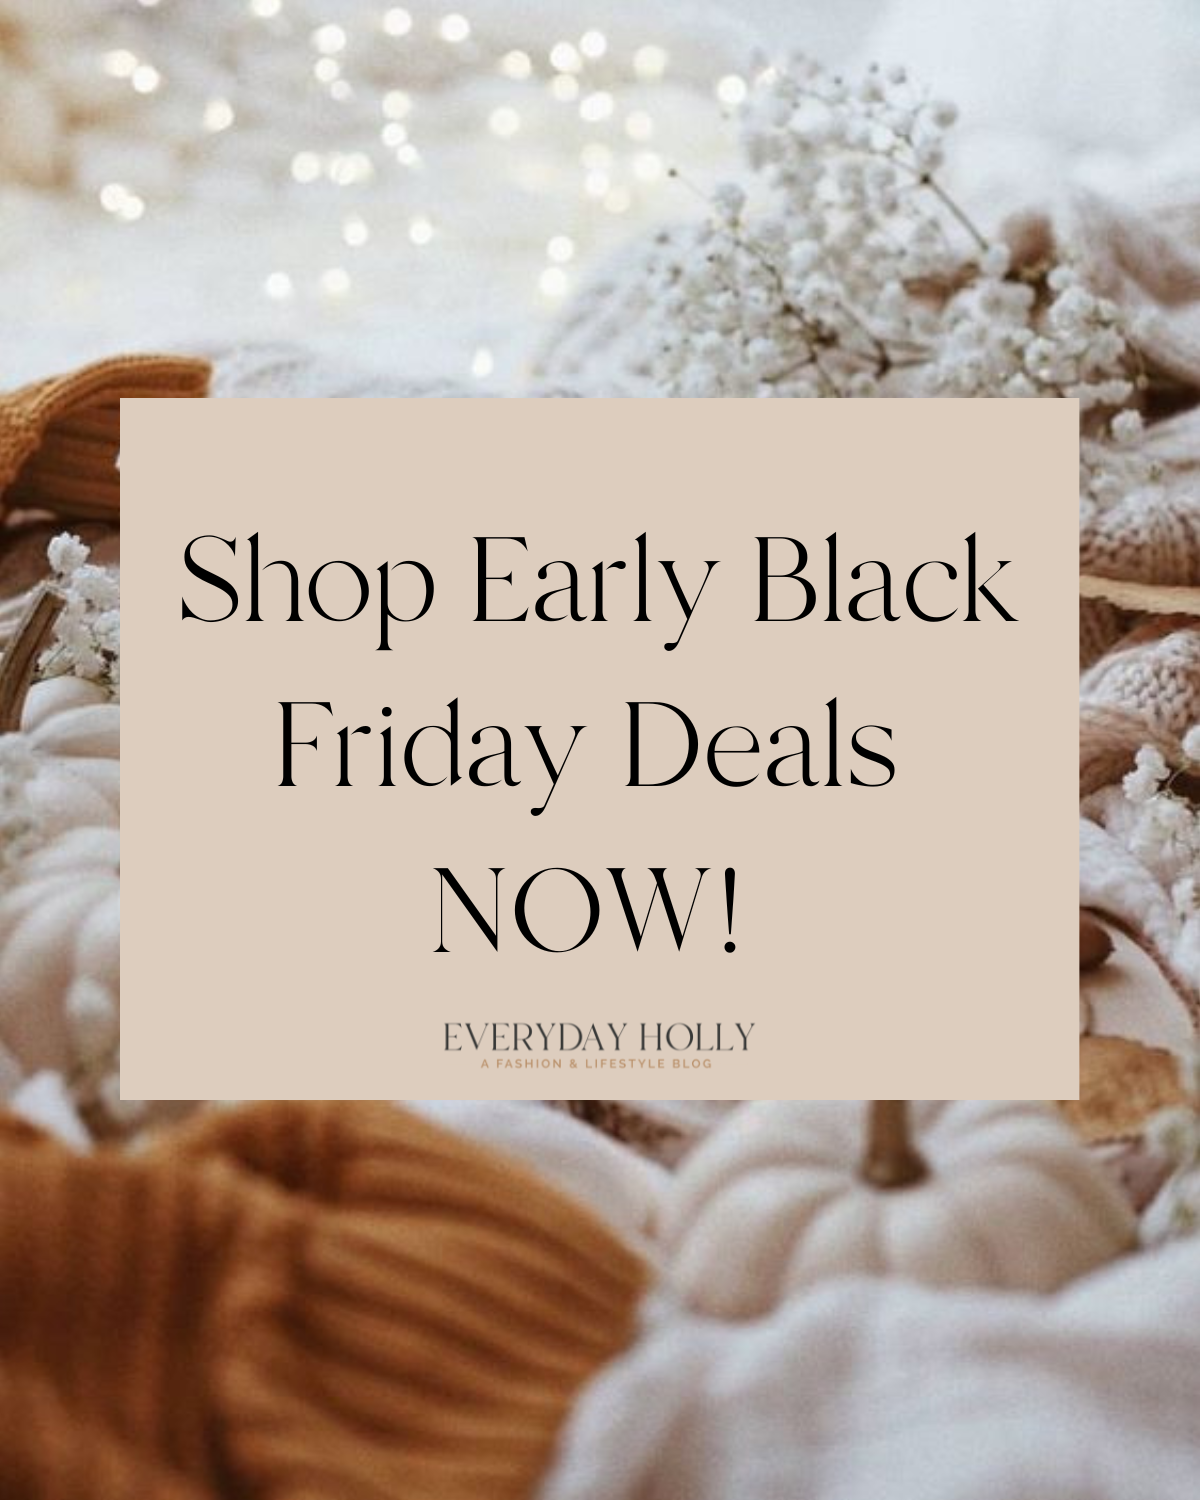 shop early black friday deals now | #shop #blackfriday #deals #earlyblackfriday #shopping #gifts #amazon #walmart #amazon #target #elemis #victoriaemerson